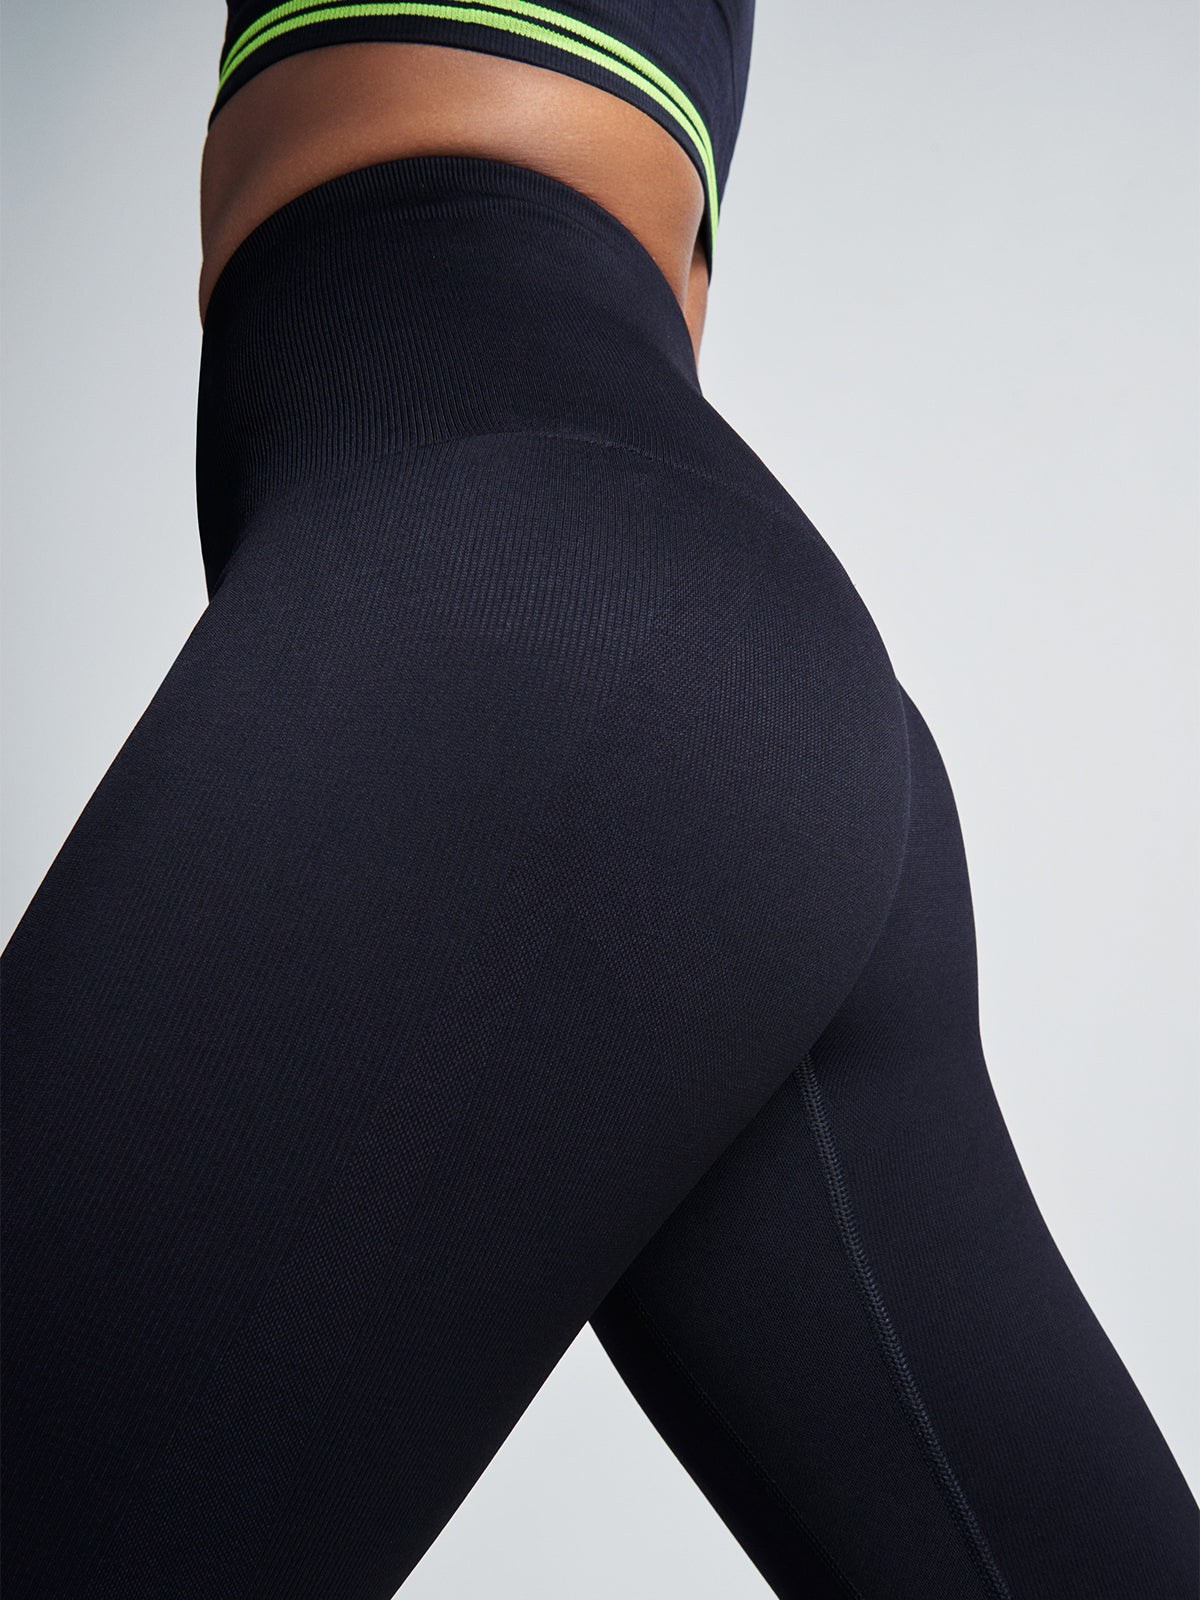 Domyos Women's Cropped Fitness Leggings - Black (XS / W26 L28